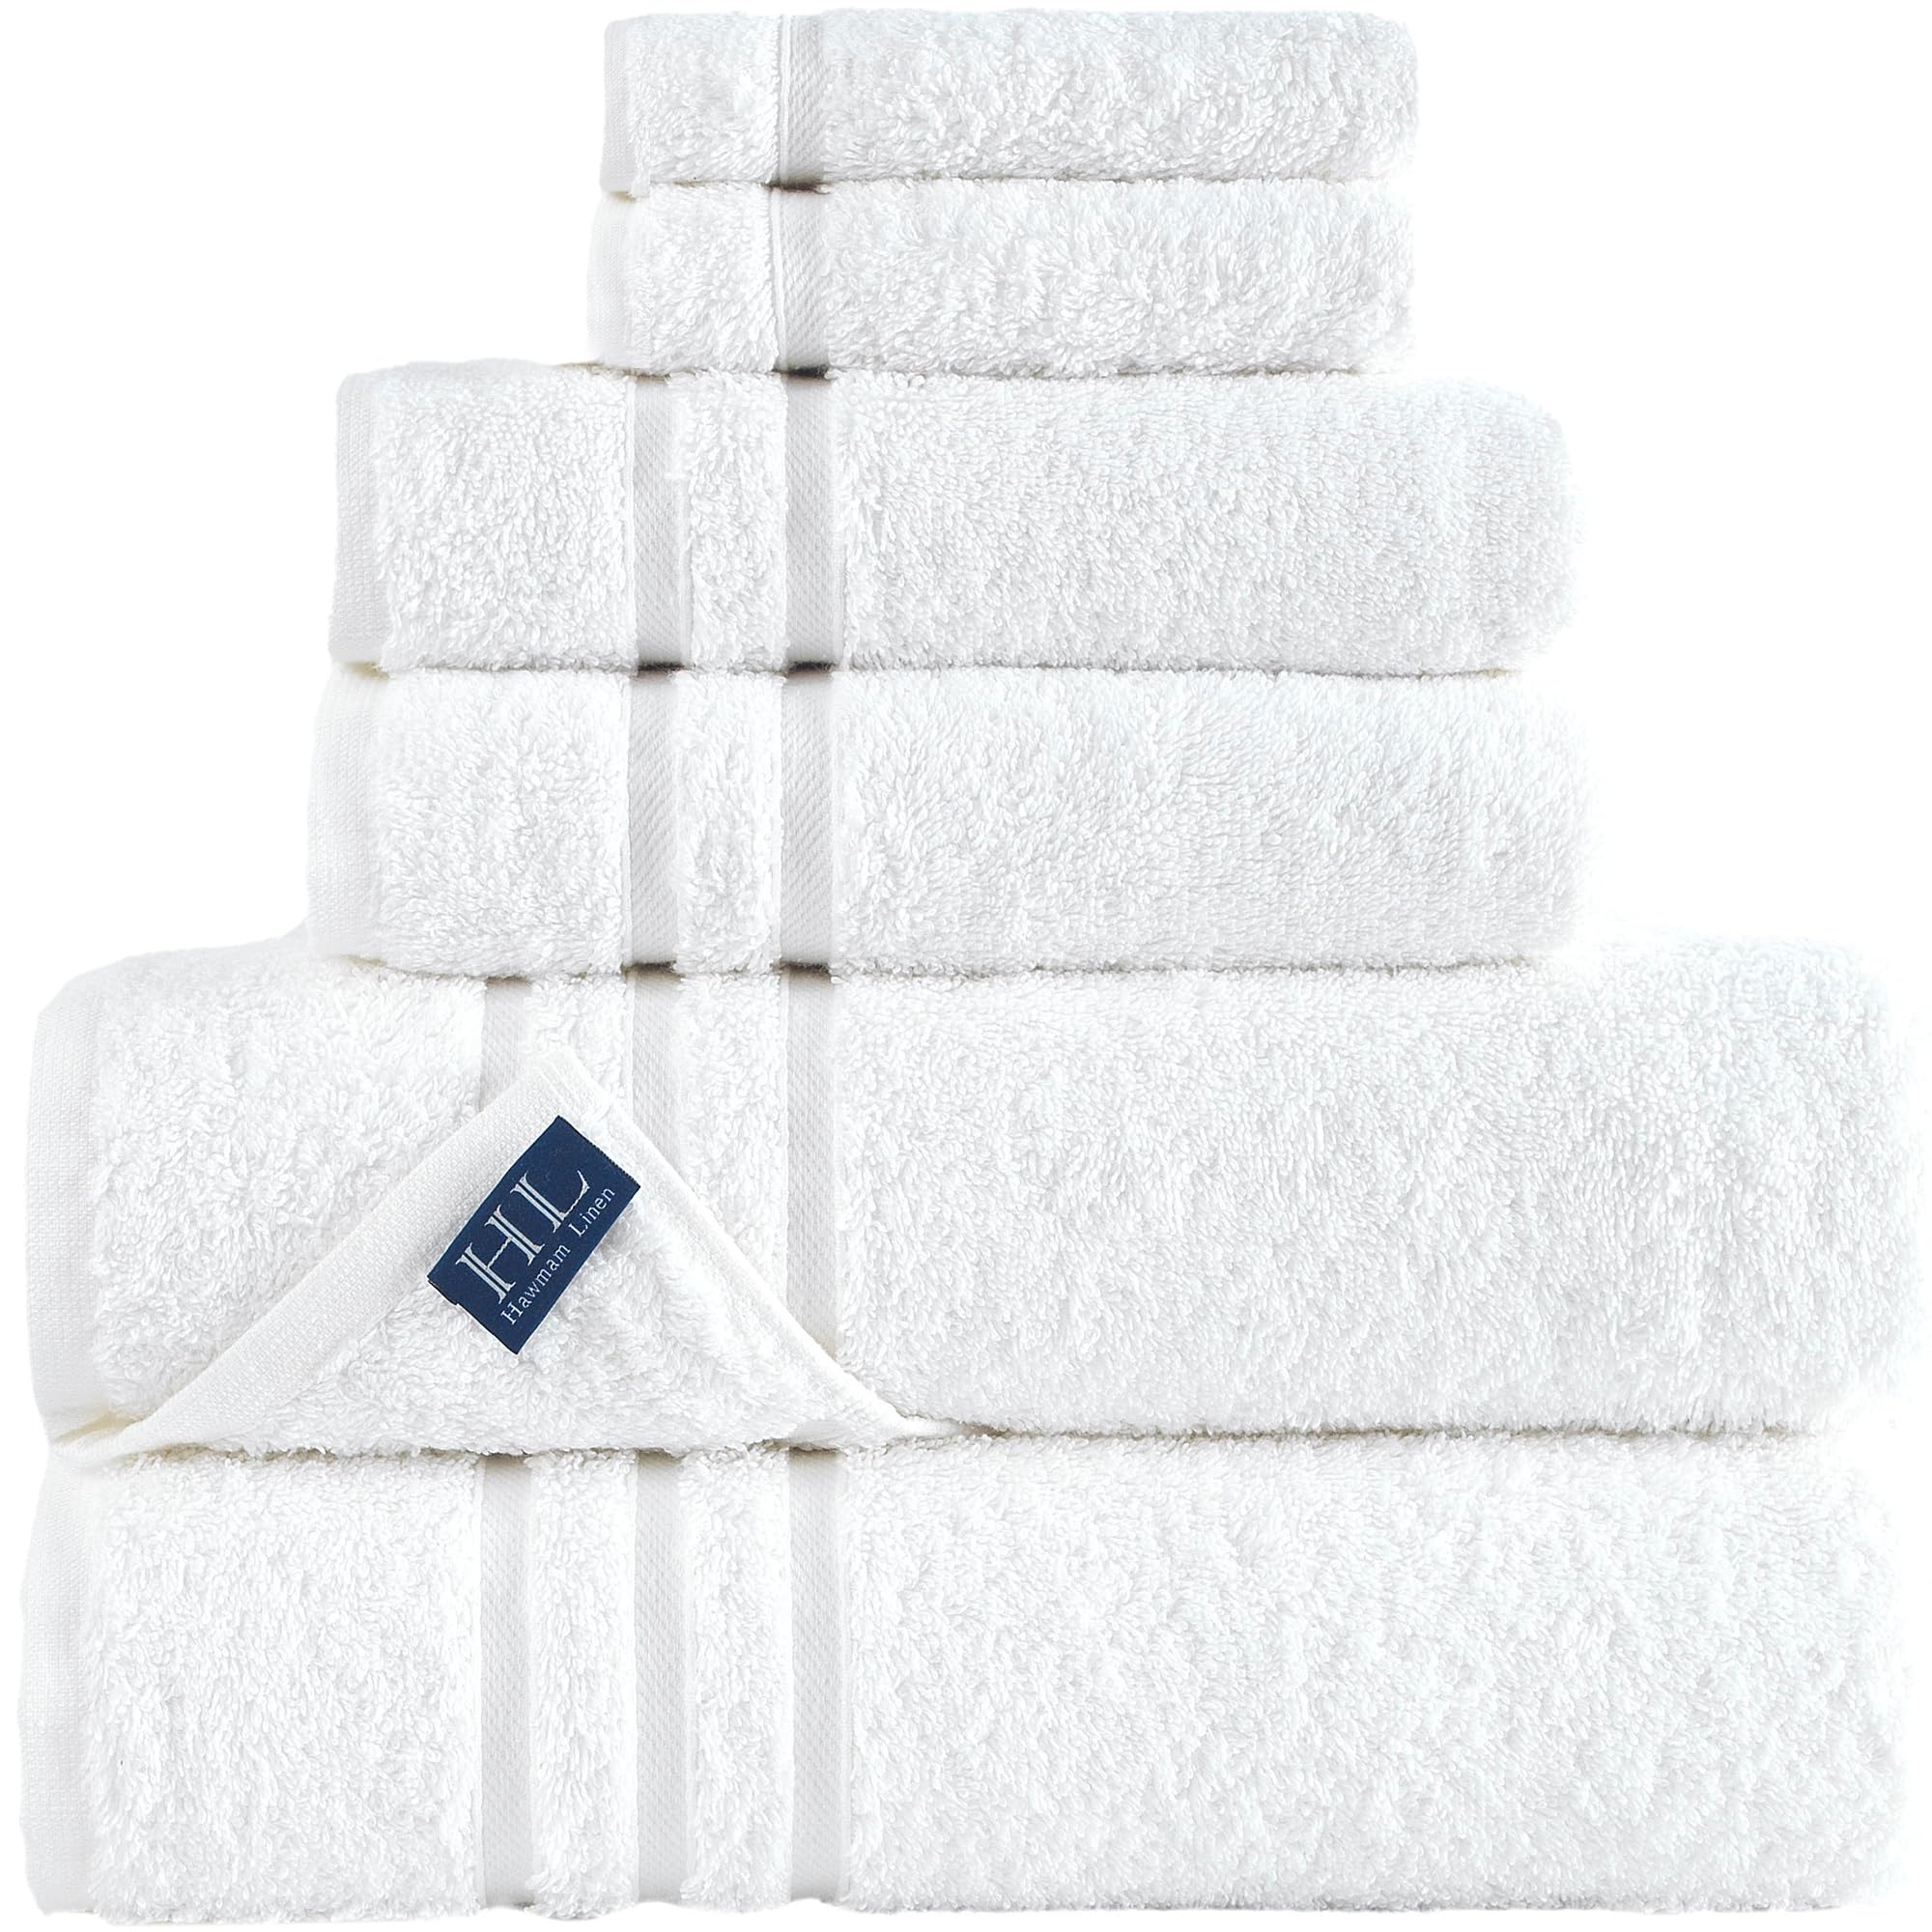 Hawmam Linen White Bath Towels Set 6-Piece Original Turkish Cotton Soft, Absorbent Towel for Bathroom and Kitchen 2 Bath Towels, 2 Hand Towels, 2